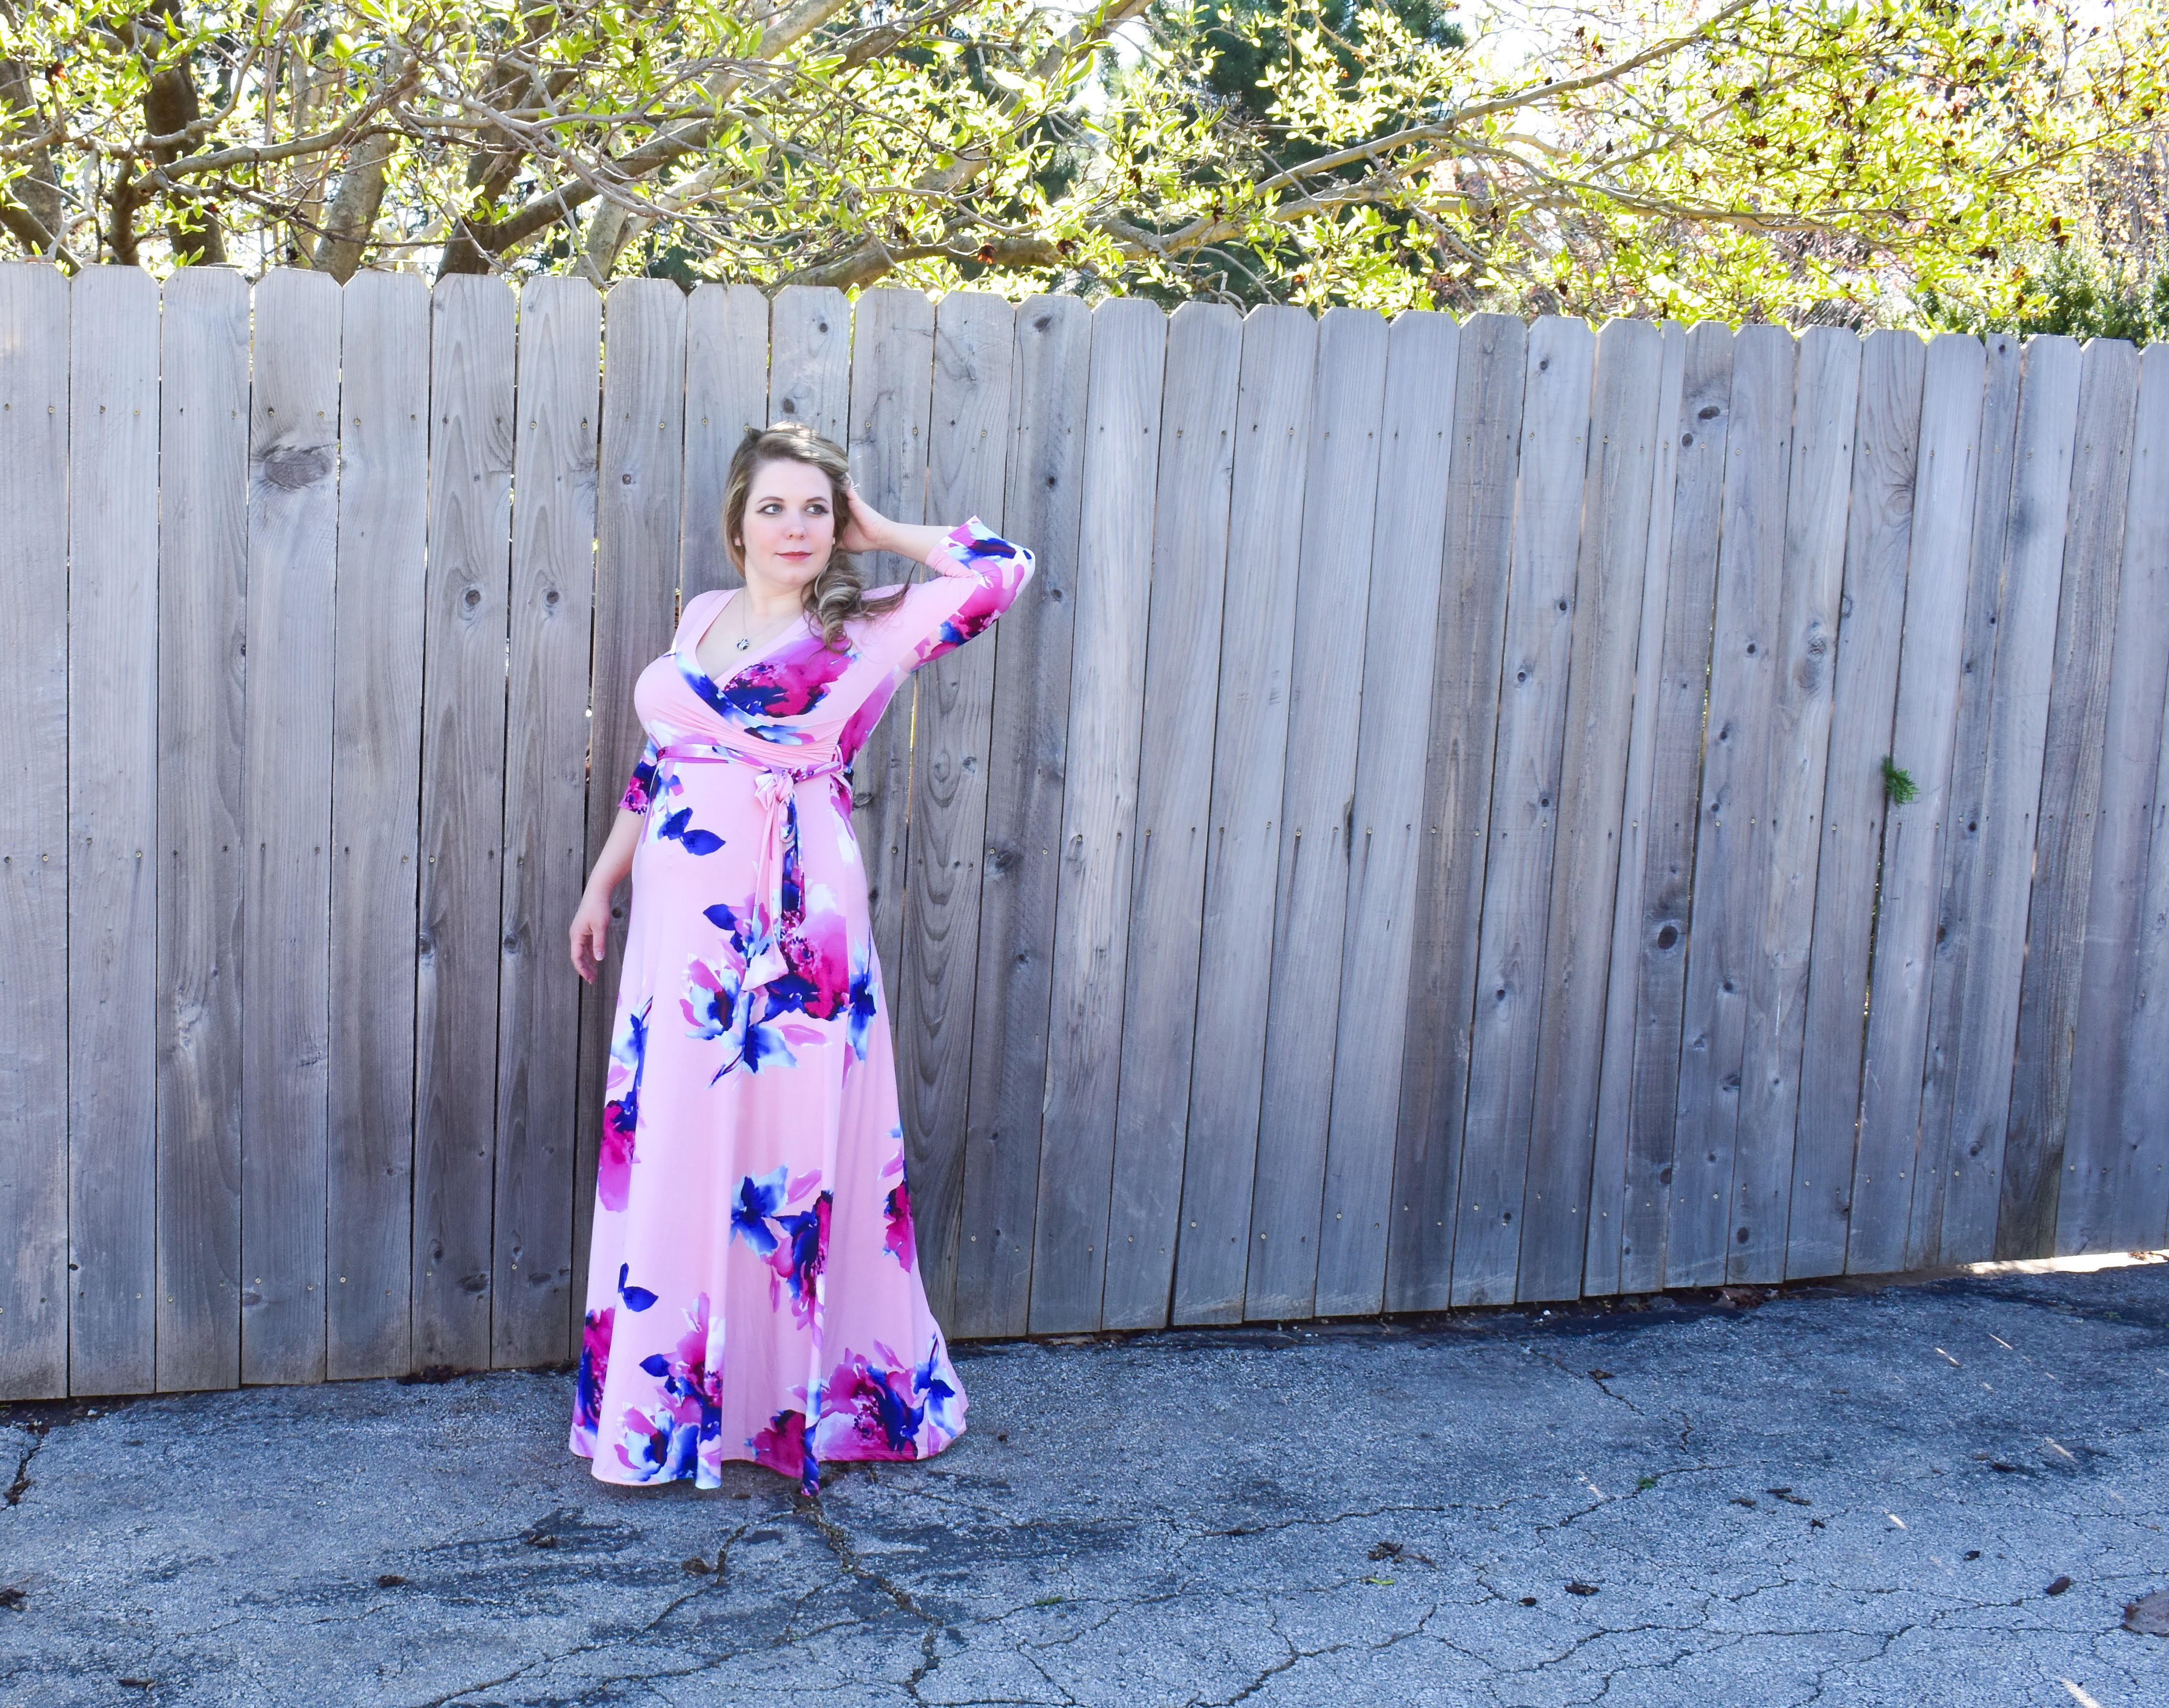 PinkBlush Navy Lace Trim Plus Maternity Pajama Set